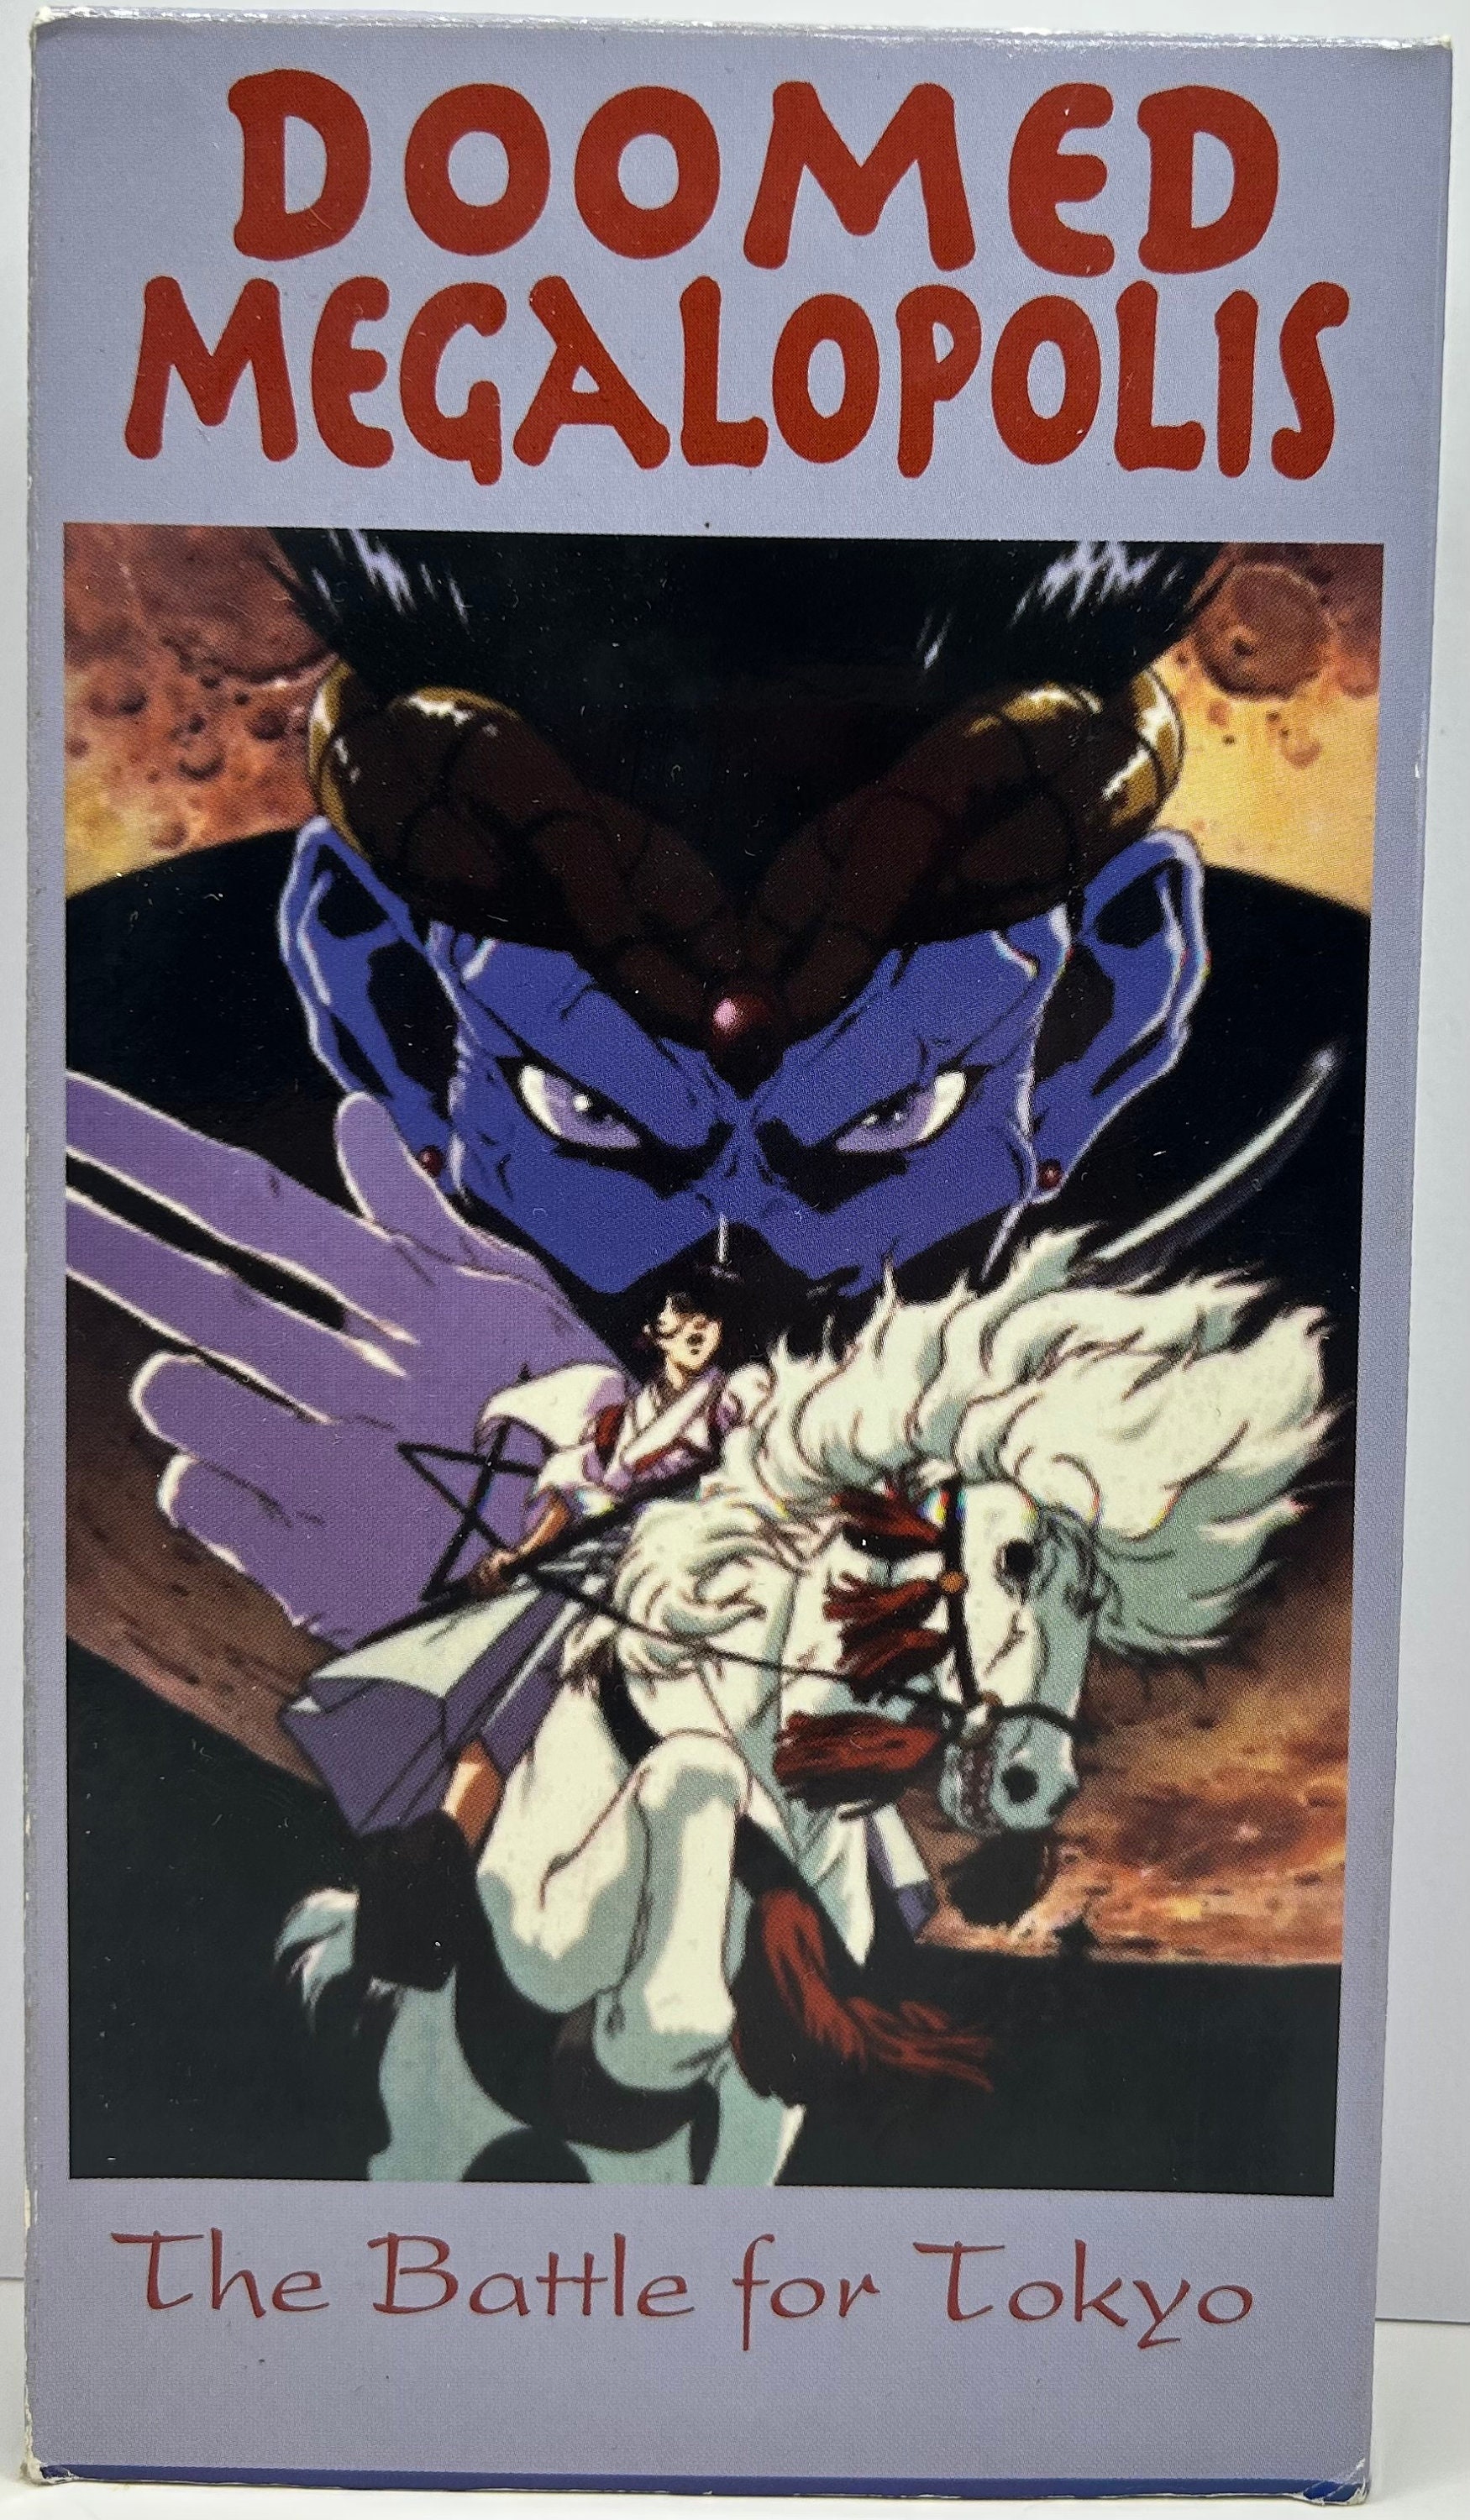 1995 Doomed Megalopolis 4 - The Battle for Tokyo English Dubbed VHS Horror  Thriller Japanese Vintage Anime Rare Home Video Tape